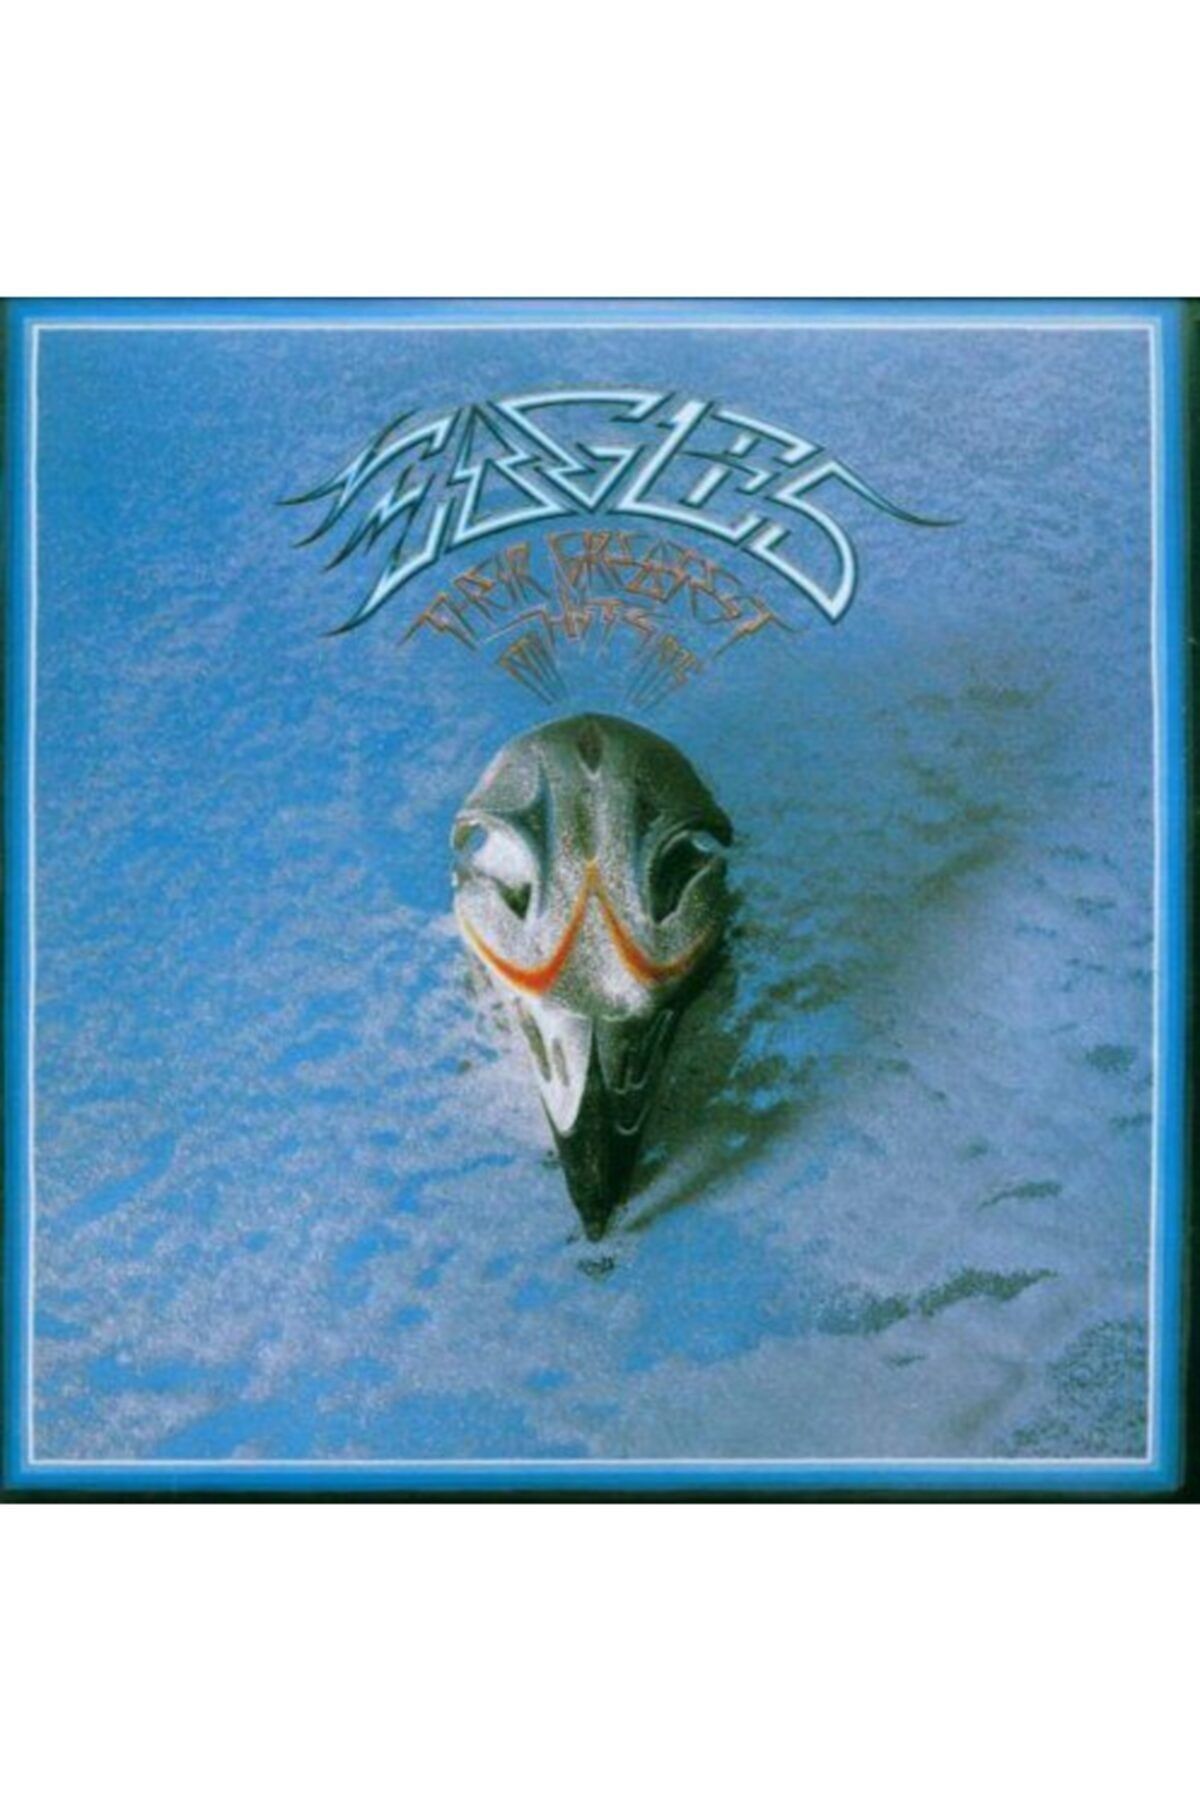 Rhino Their Greatest Hits The Eagles CD 71-75 - Cd